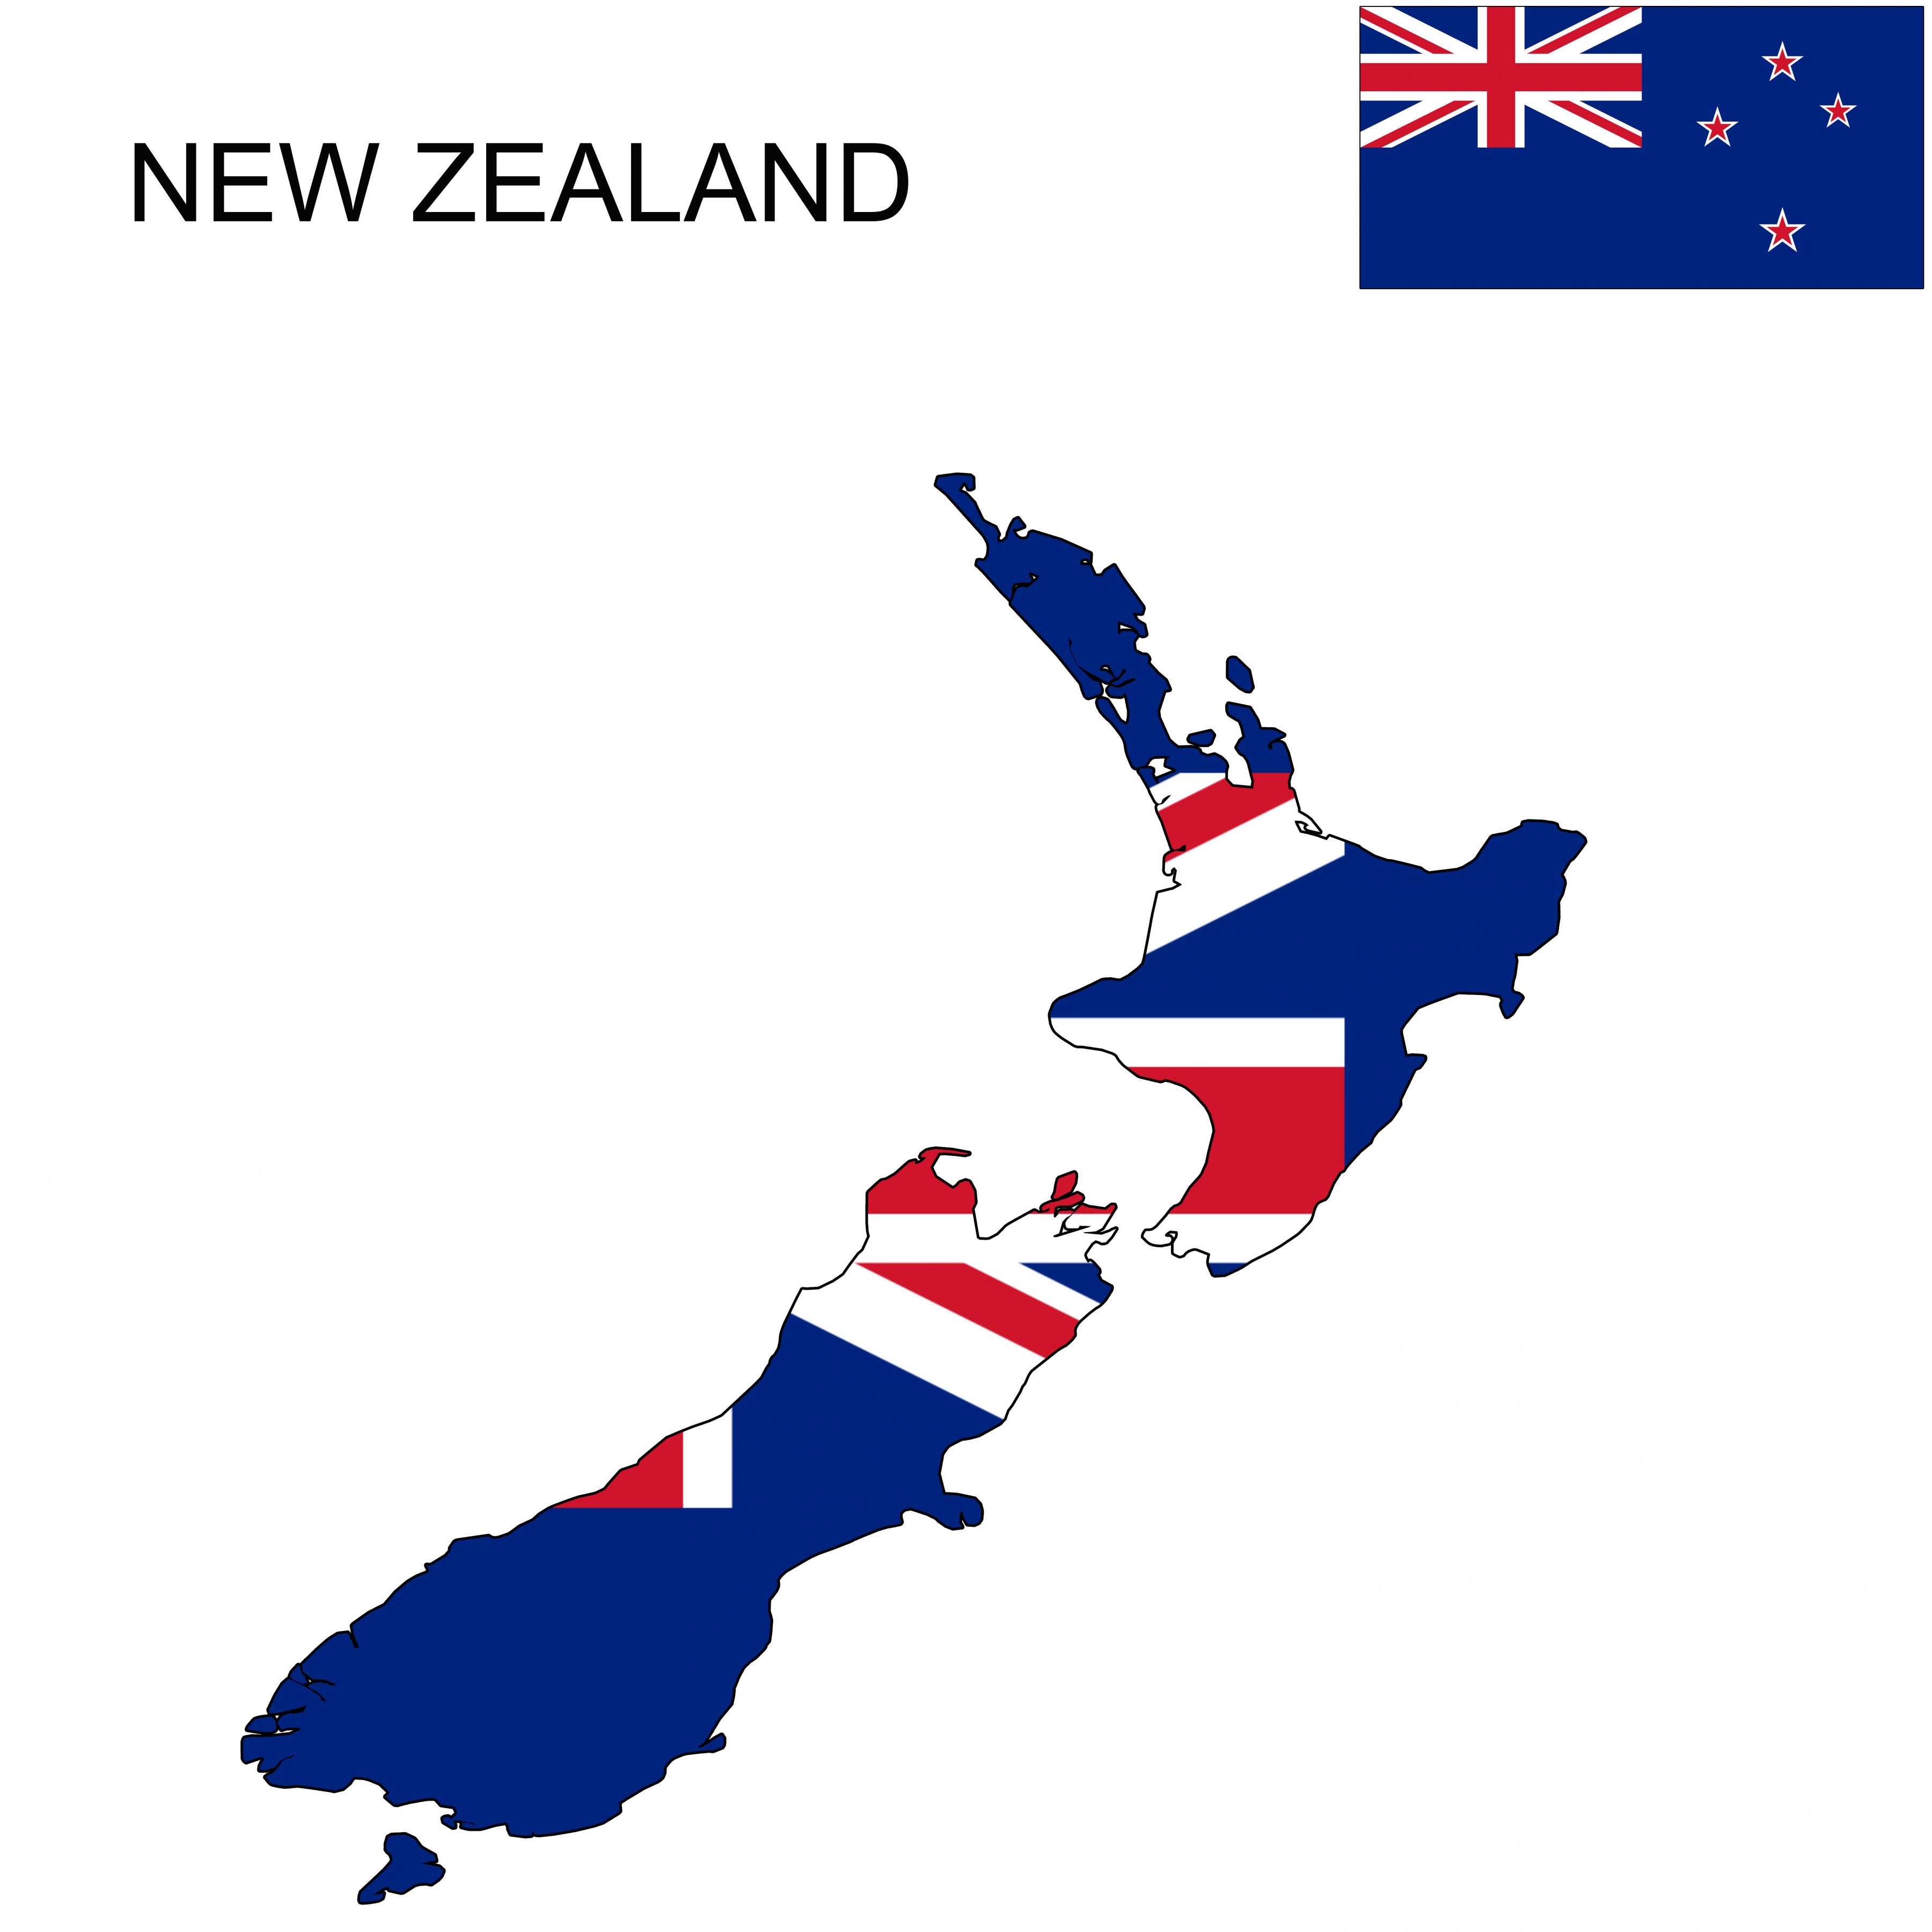 Bendera new zealand dan australia